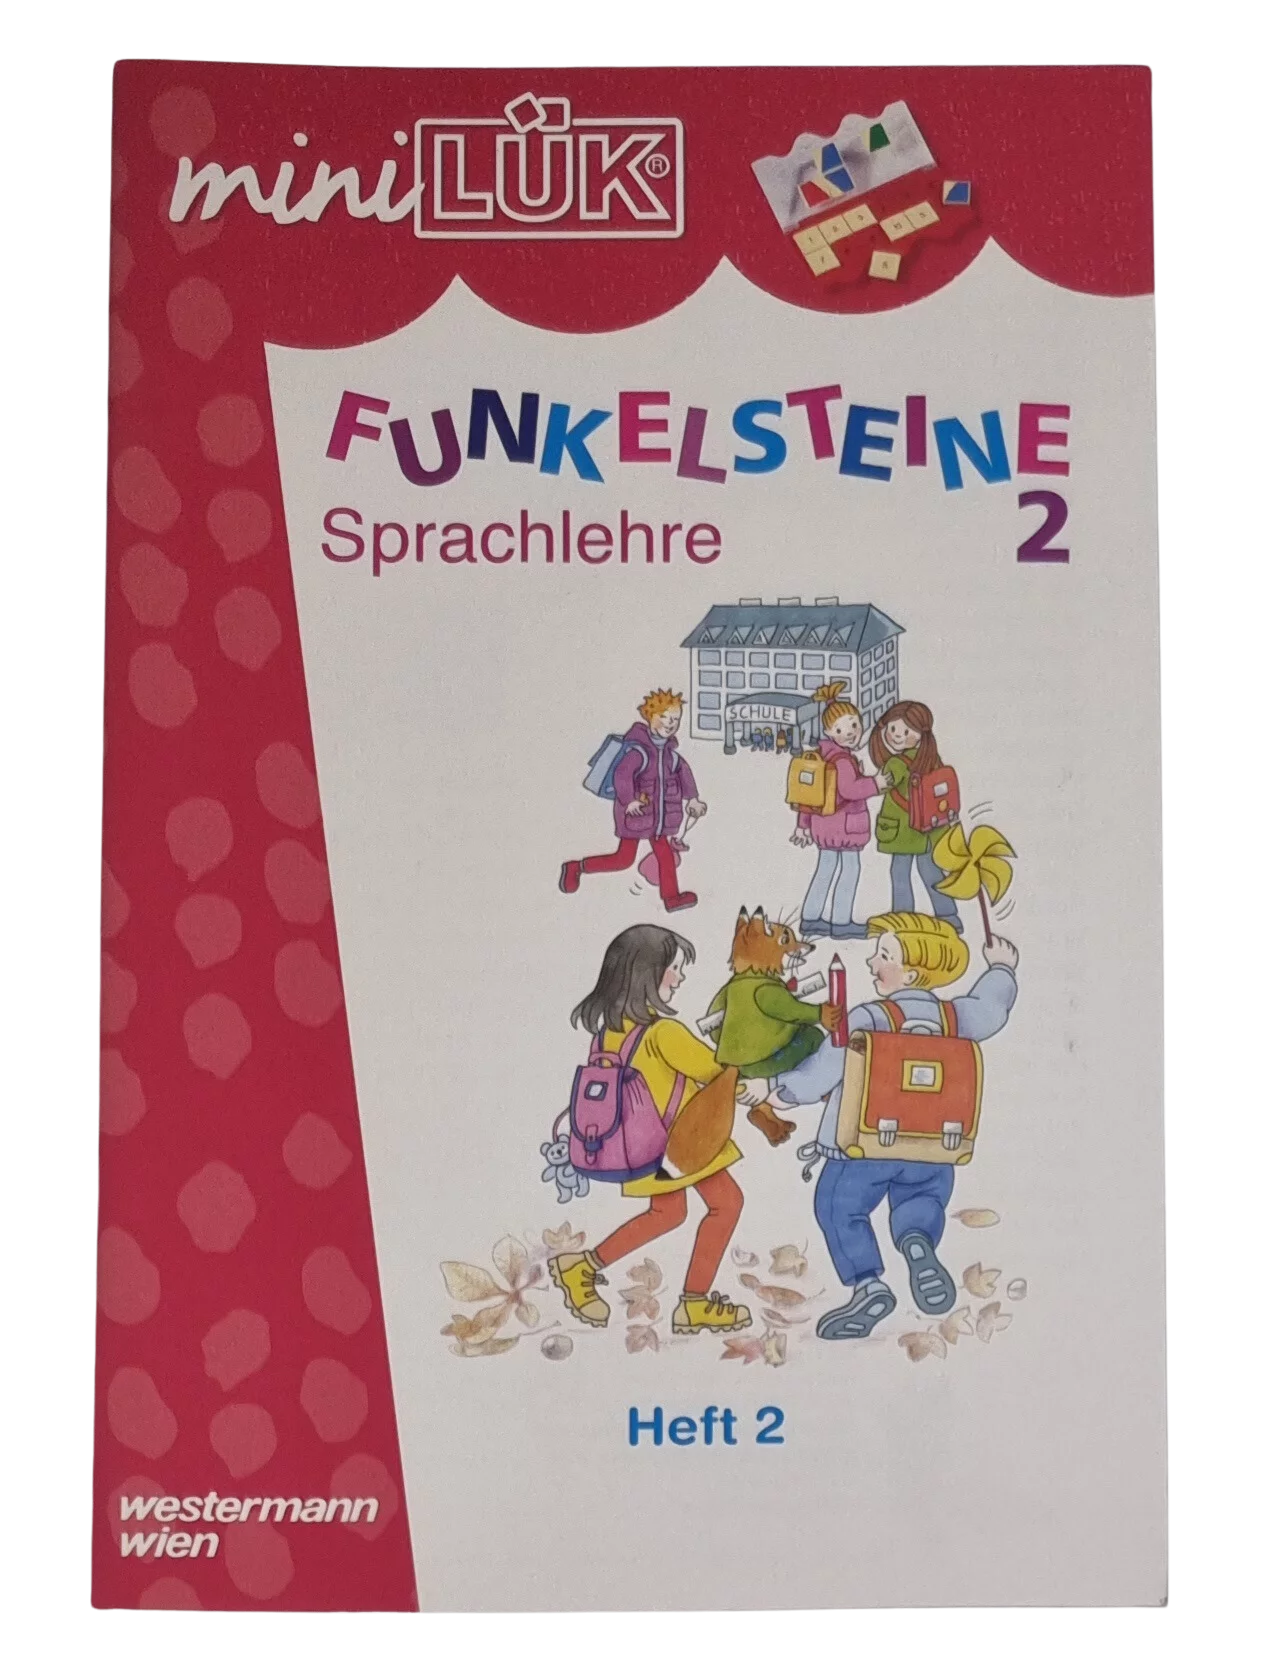 Mini Lük Funkelsteine Sprachlehre 2 Heft 2